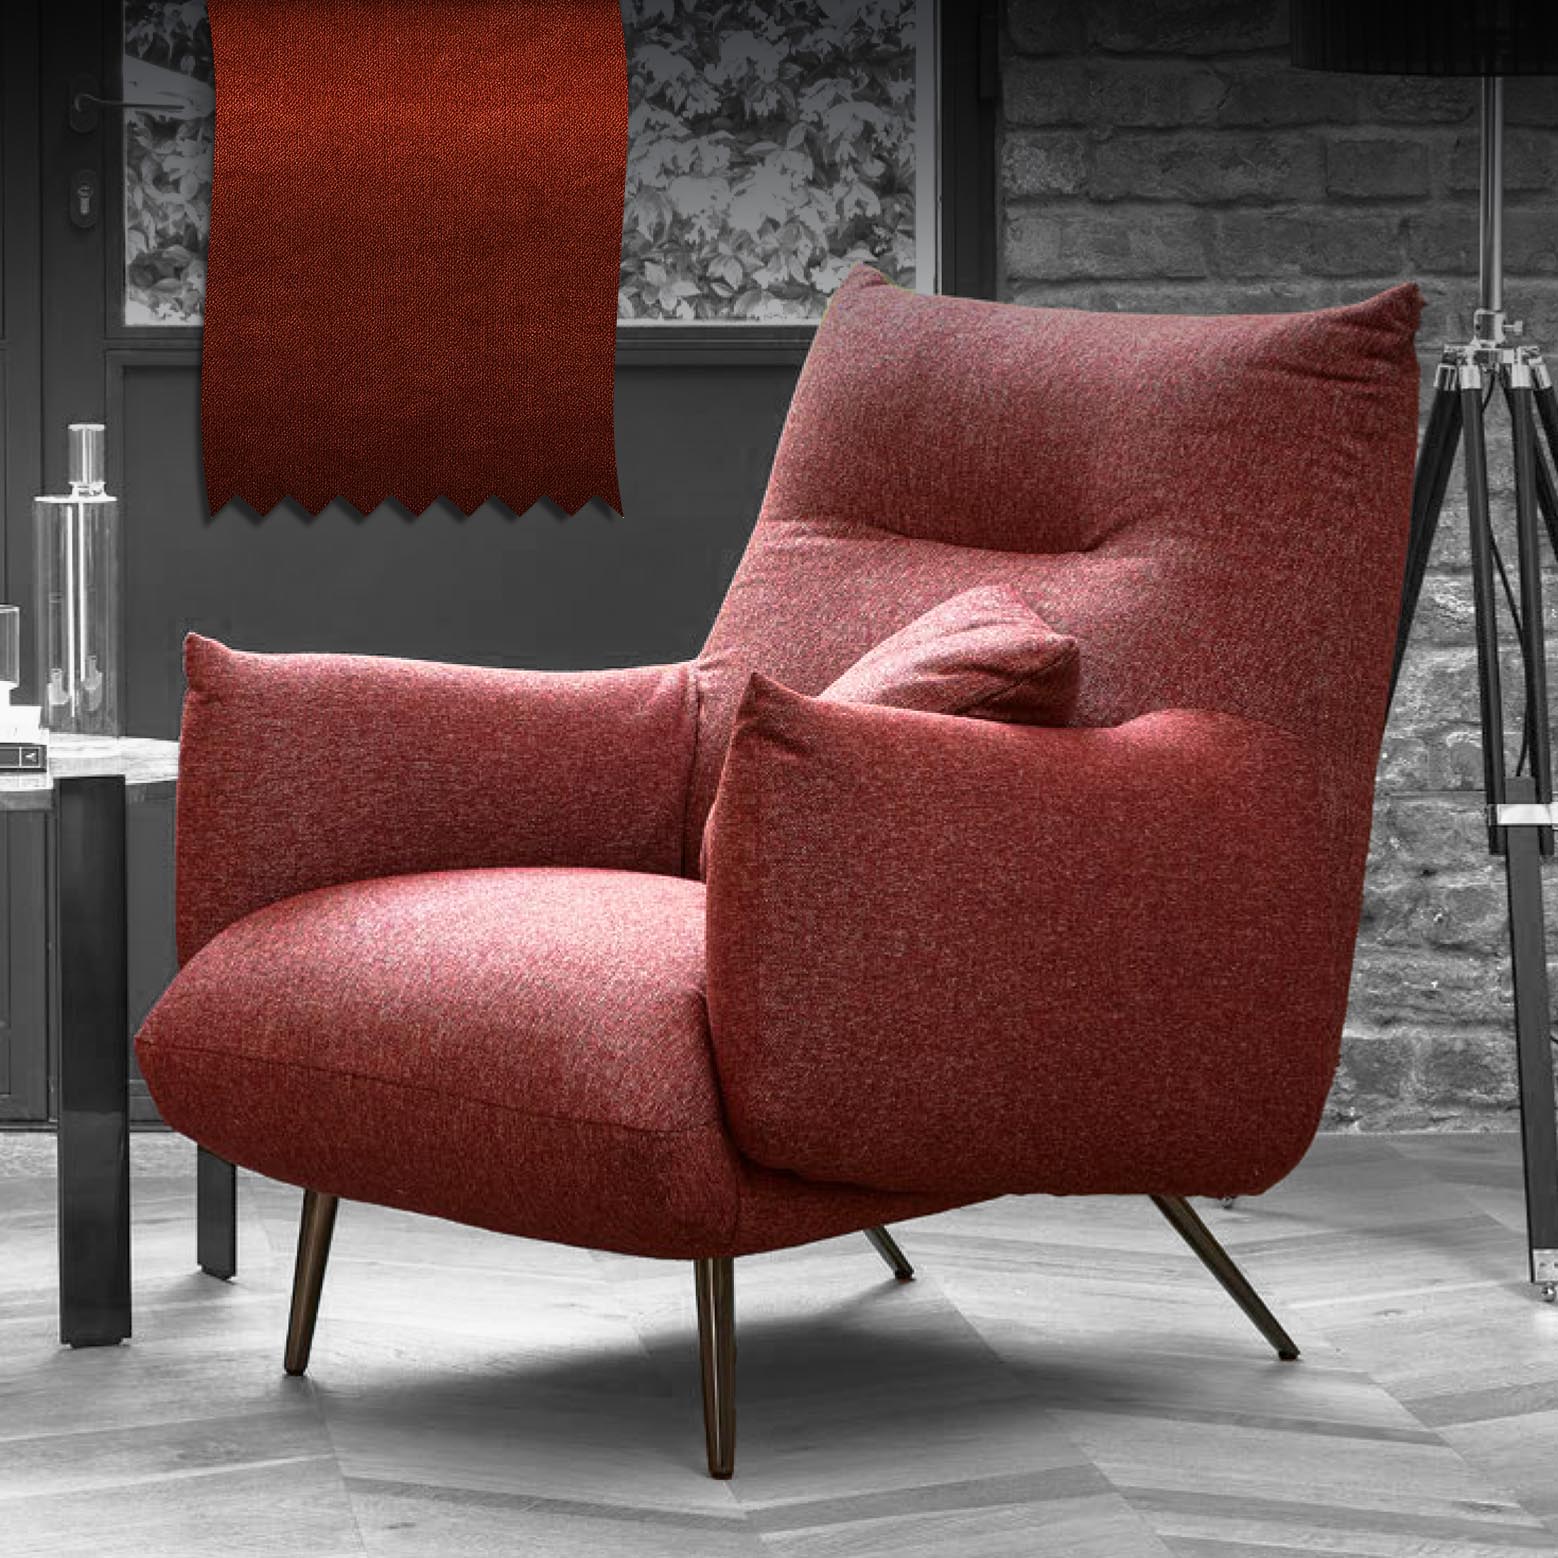 Кресло ROS SRL Rodi ткань Brera 304 79х95х92 см, цвет темно-красный